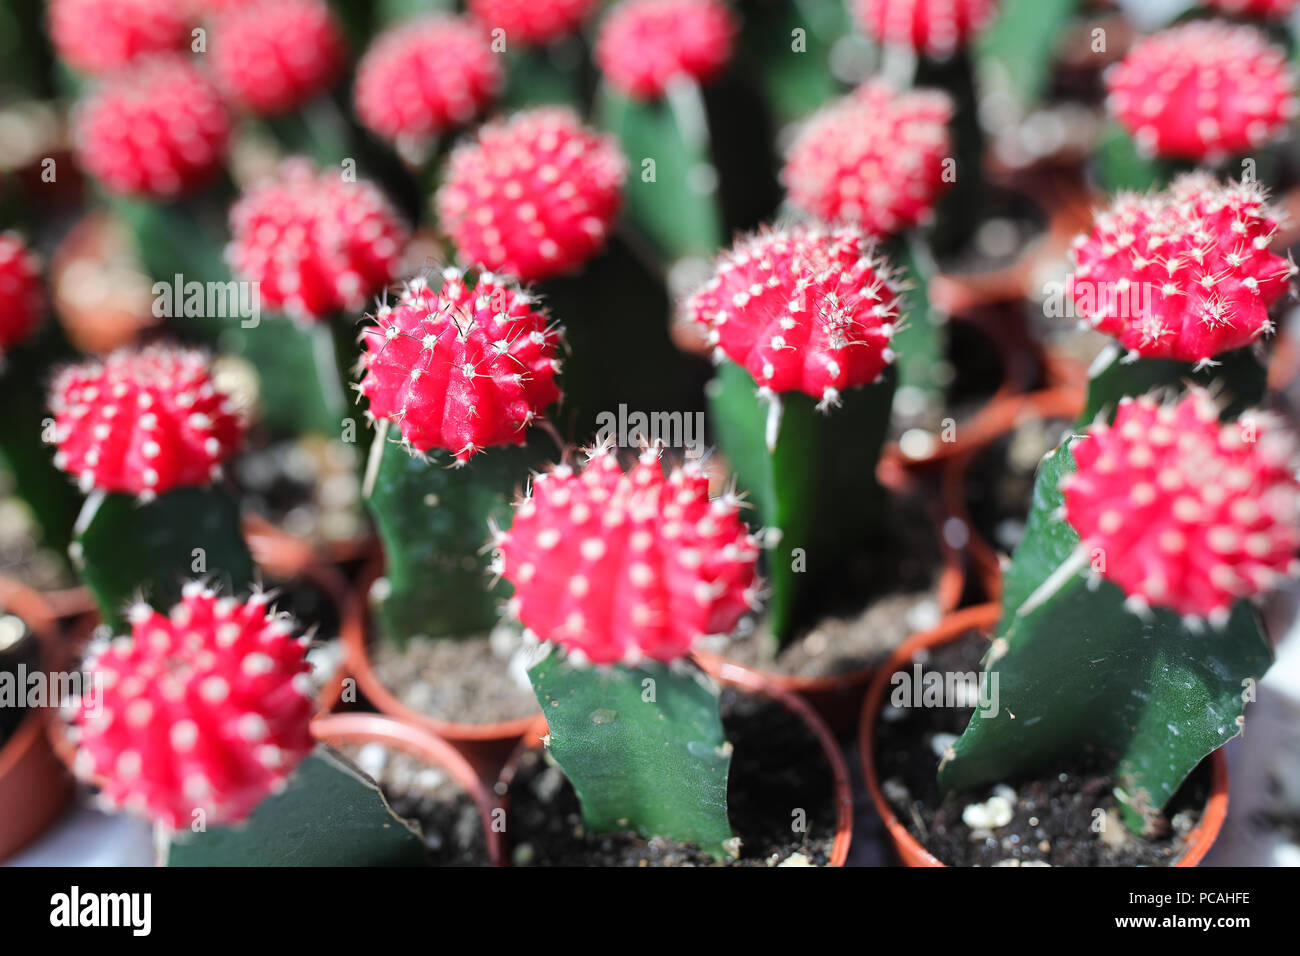 Cactus farm at Cameron Highland Malaysia Stock Photo